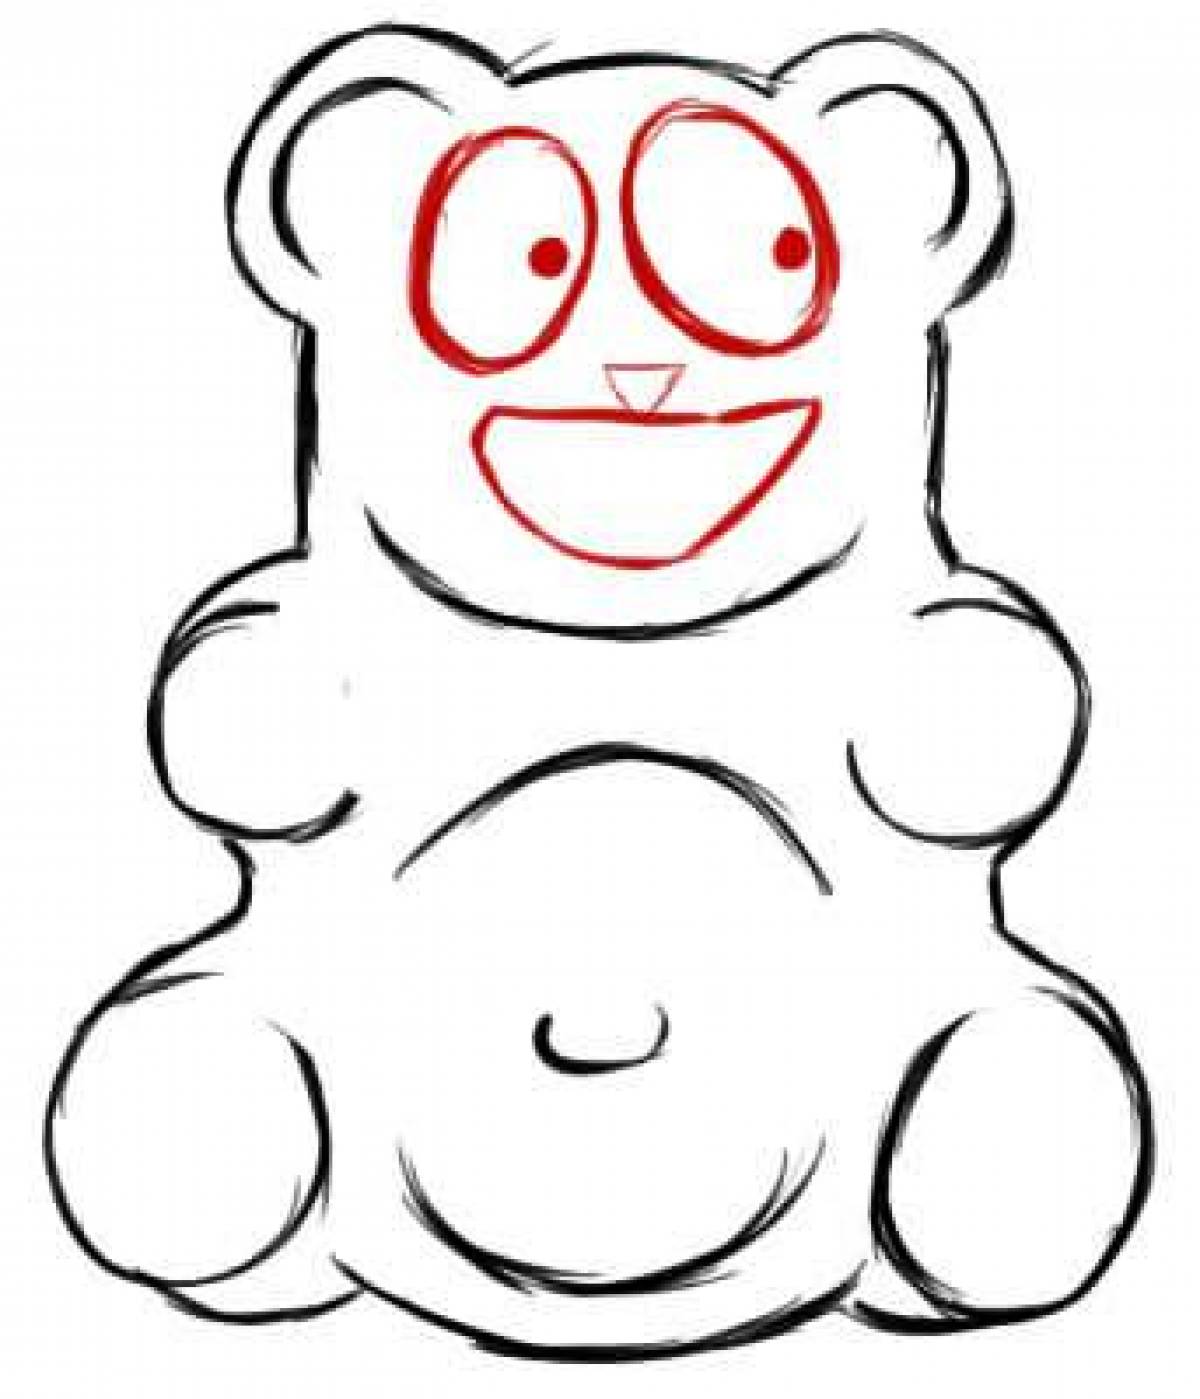 Coloring page charming teddy bear valera